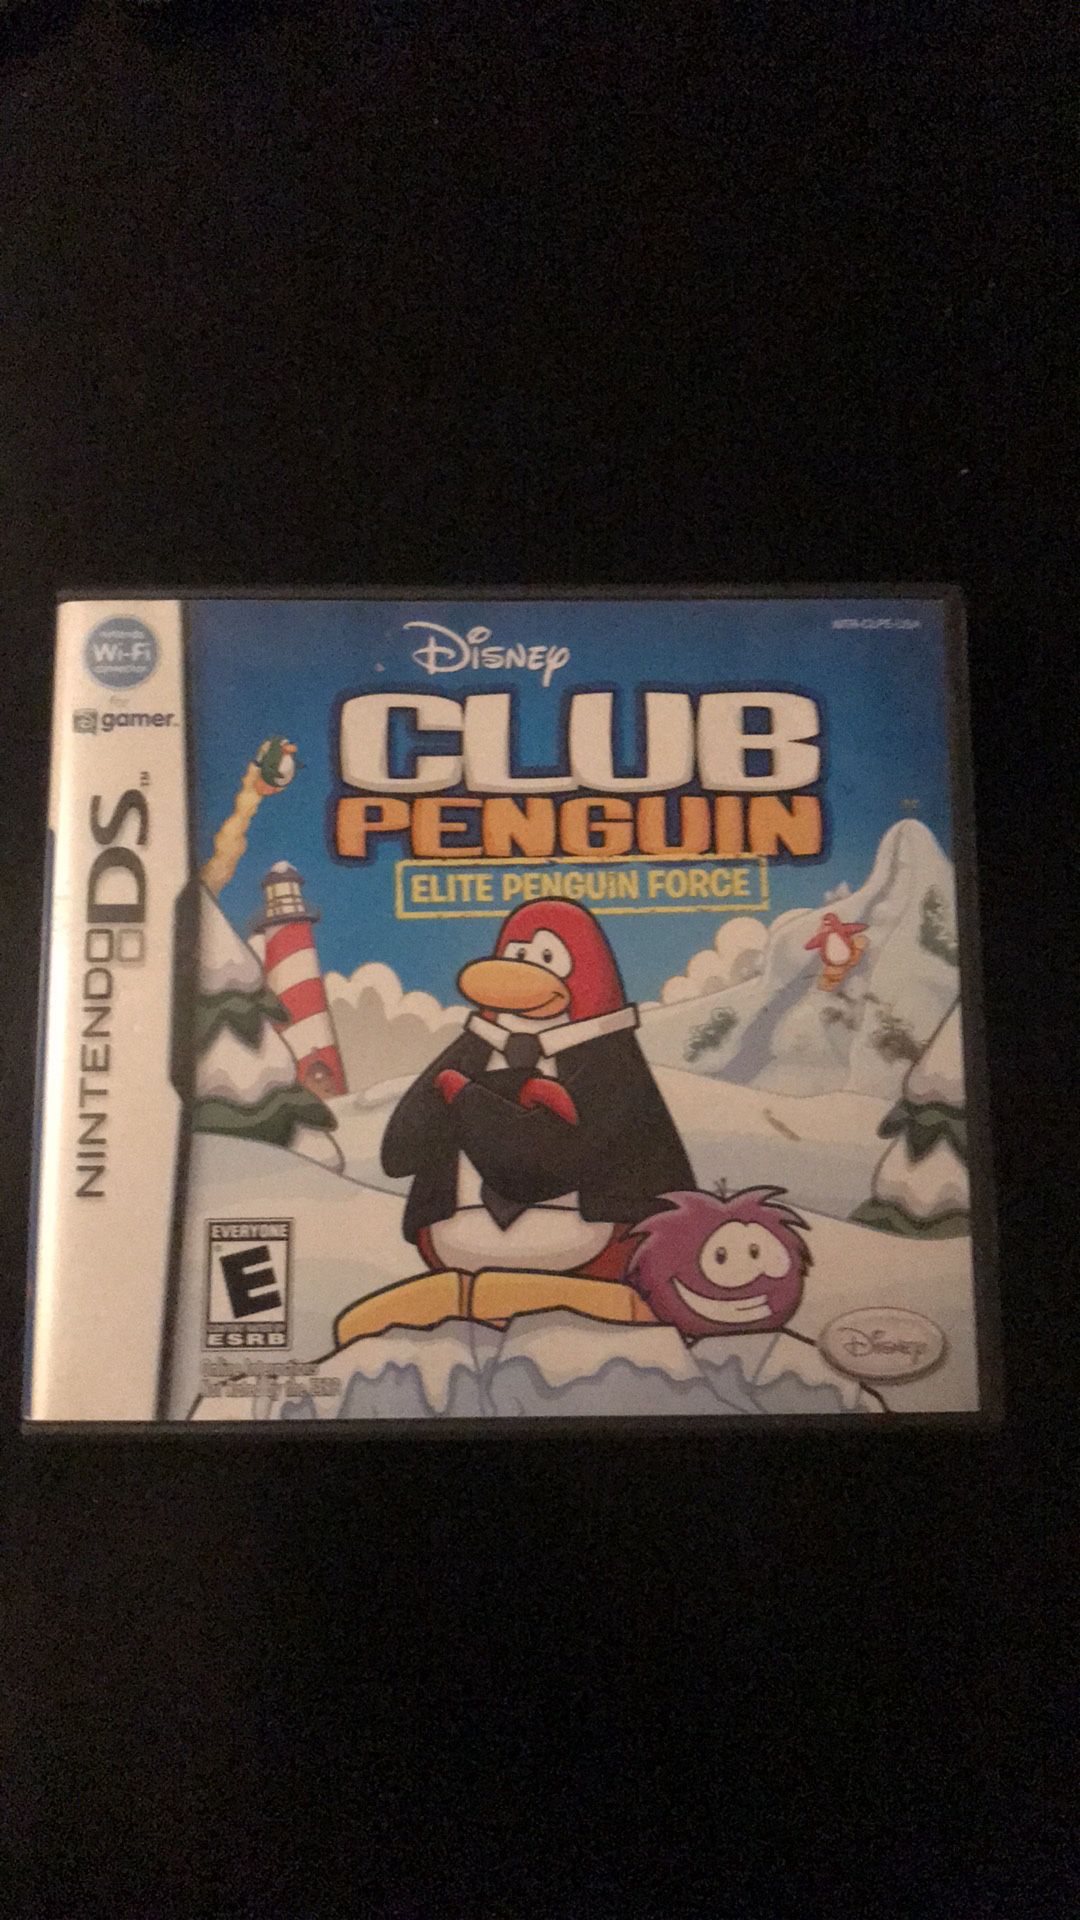 Nintendo DS “Club Penguin Elite Penguin Force”